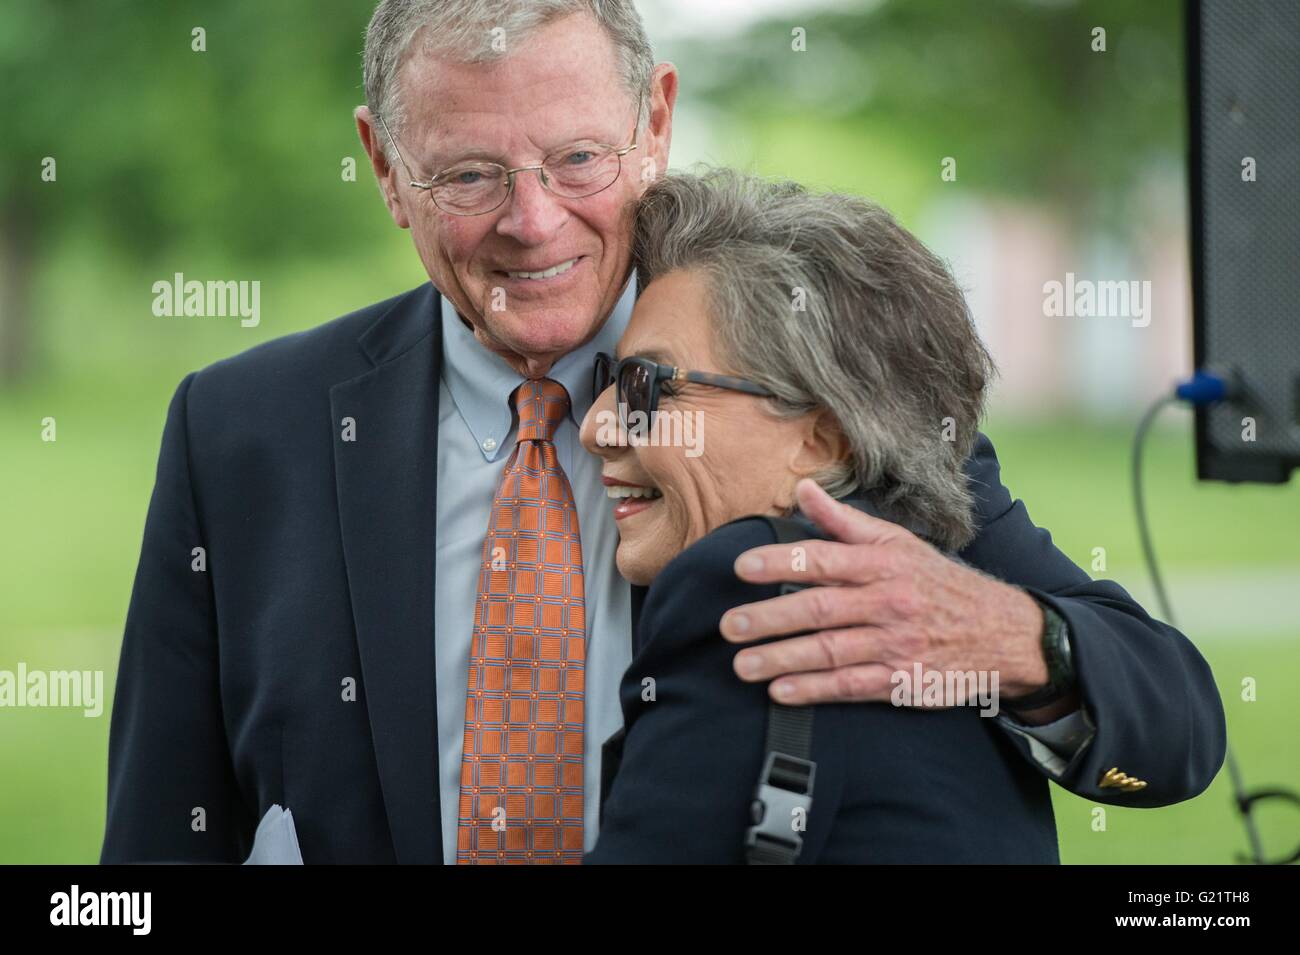 U.S Senator Barbara Boxer of California is hugged by Republican Senator Jim Inhofe of Oklahoma during a press conference on Capitol Hill May 19, 2016 in Washington, DC. Stock Photo